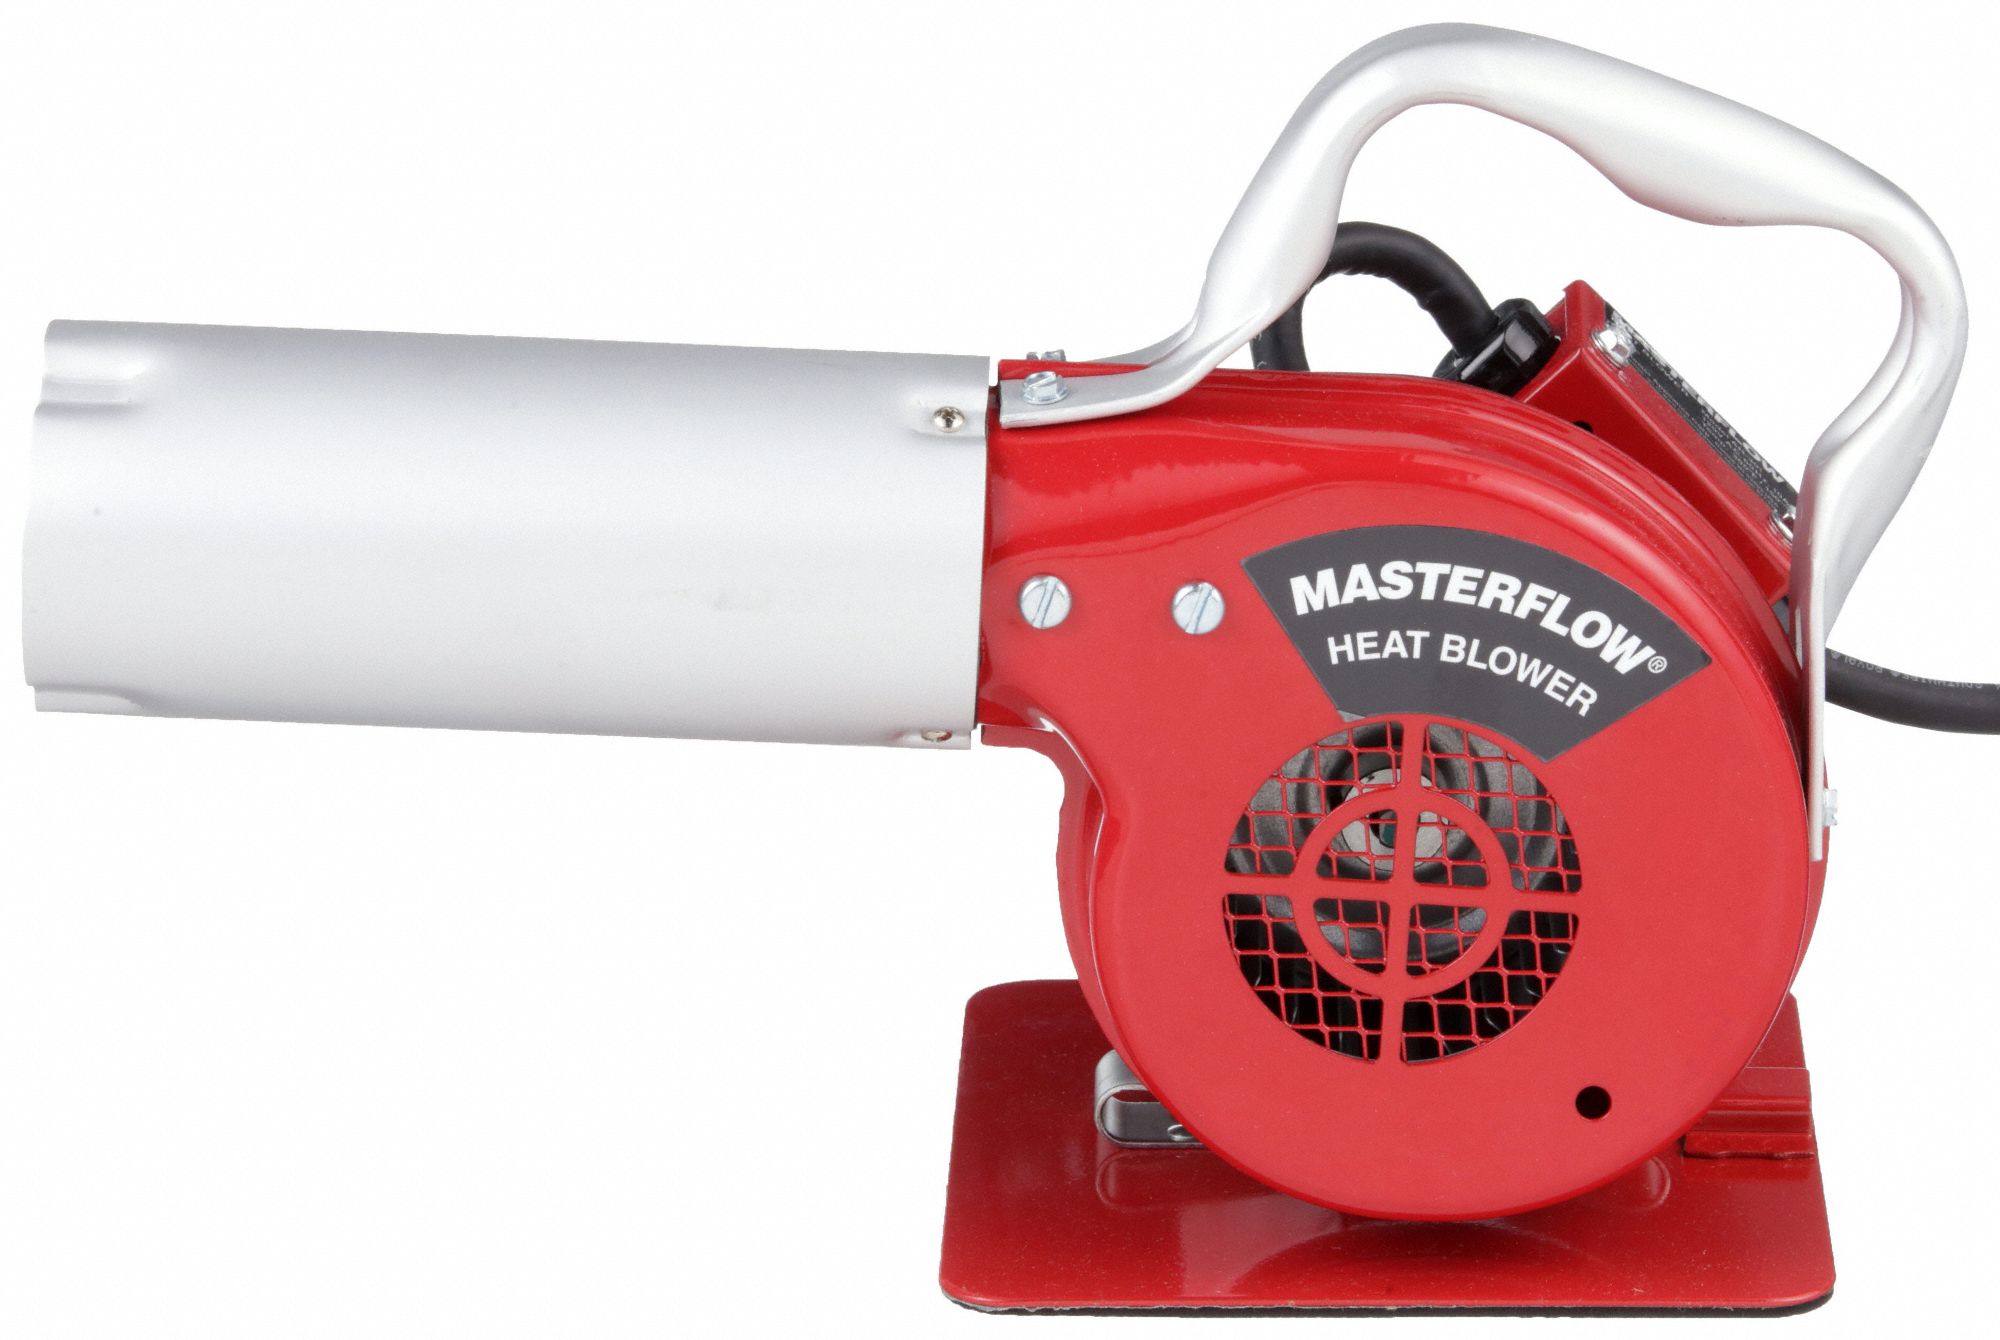 Masterflow Electric Heat Blower AH-501